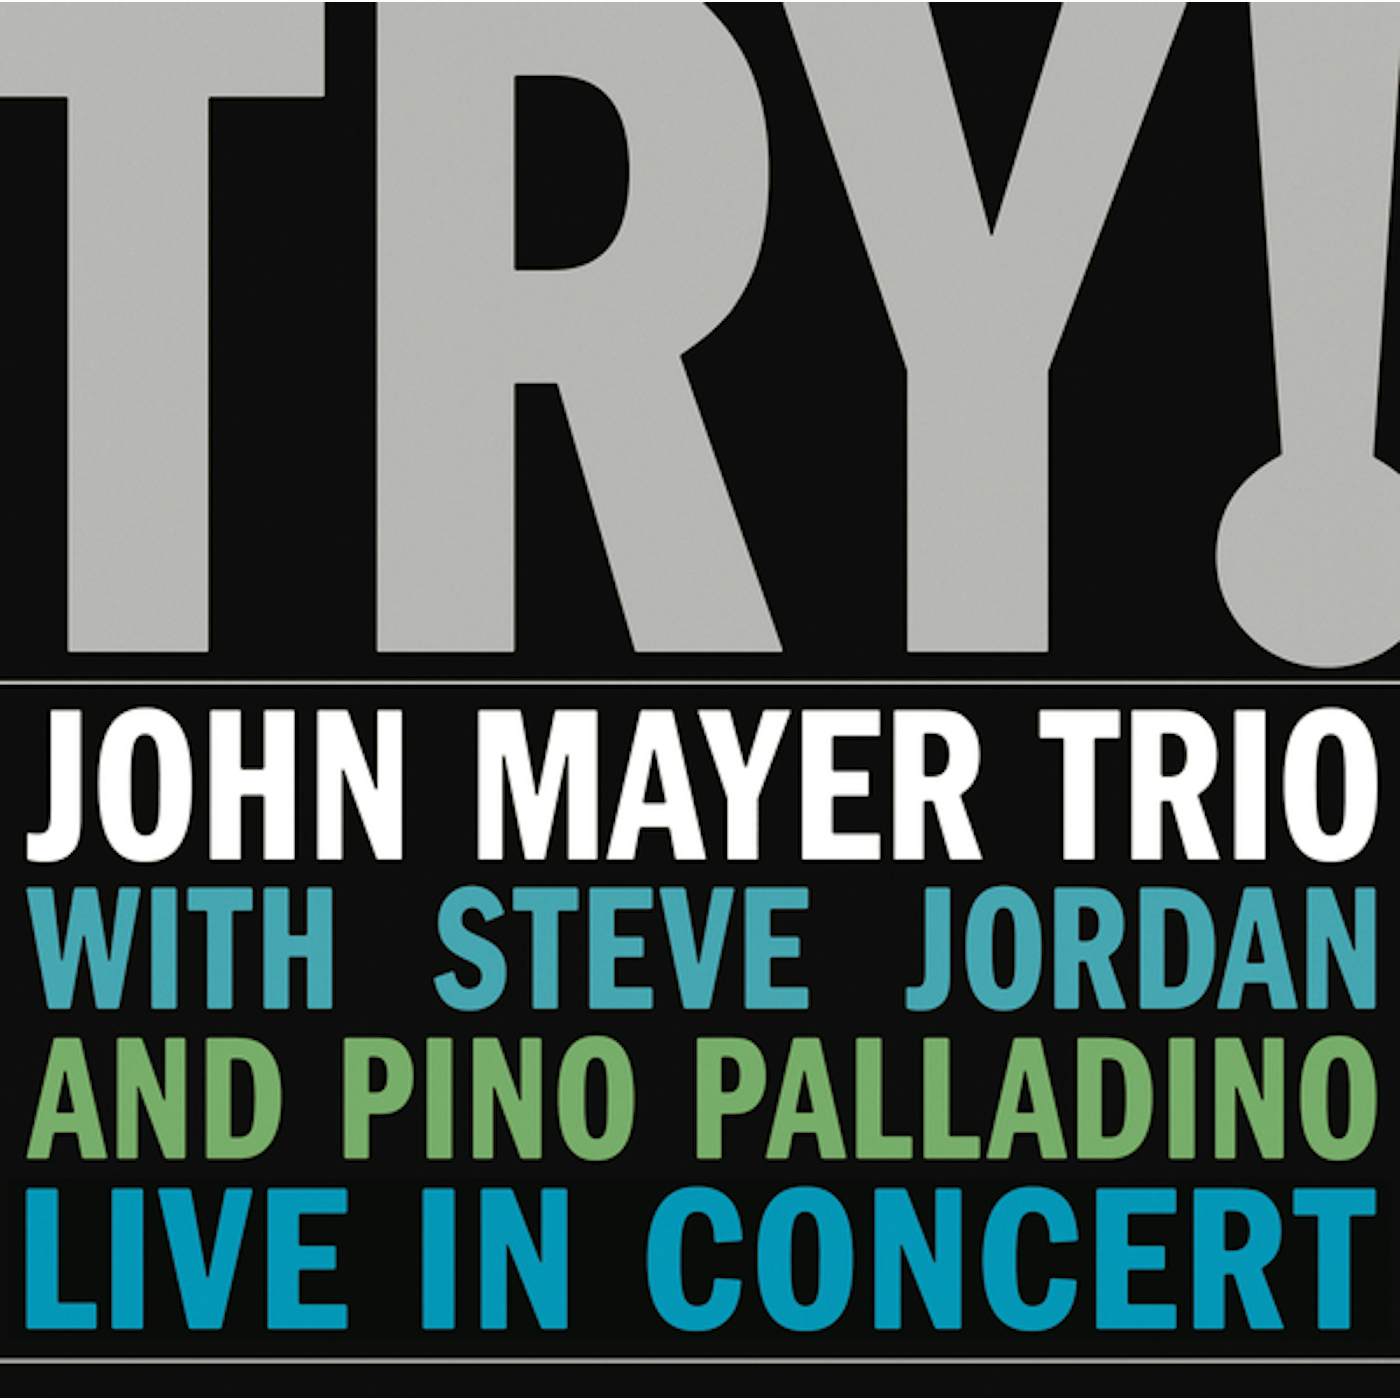 John Mayer TRY: LIVE IN CONCERT Vinyl Record